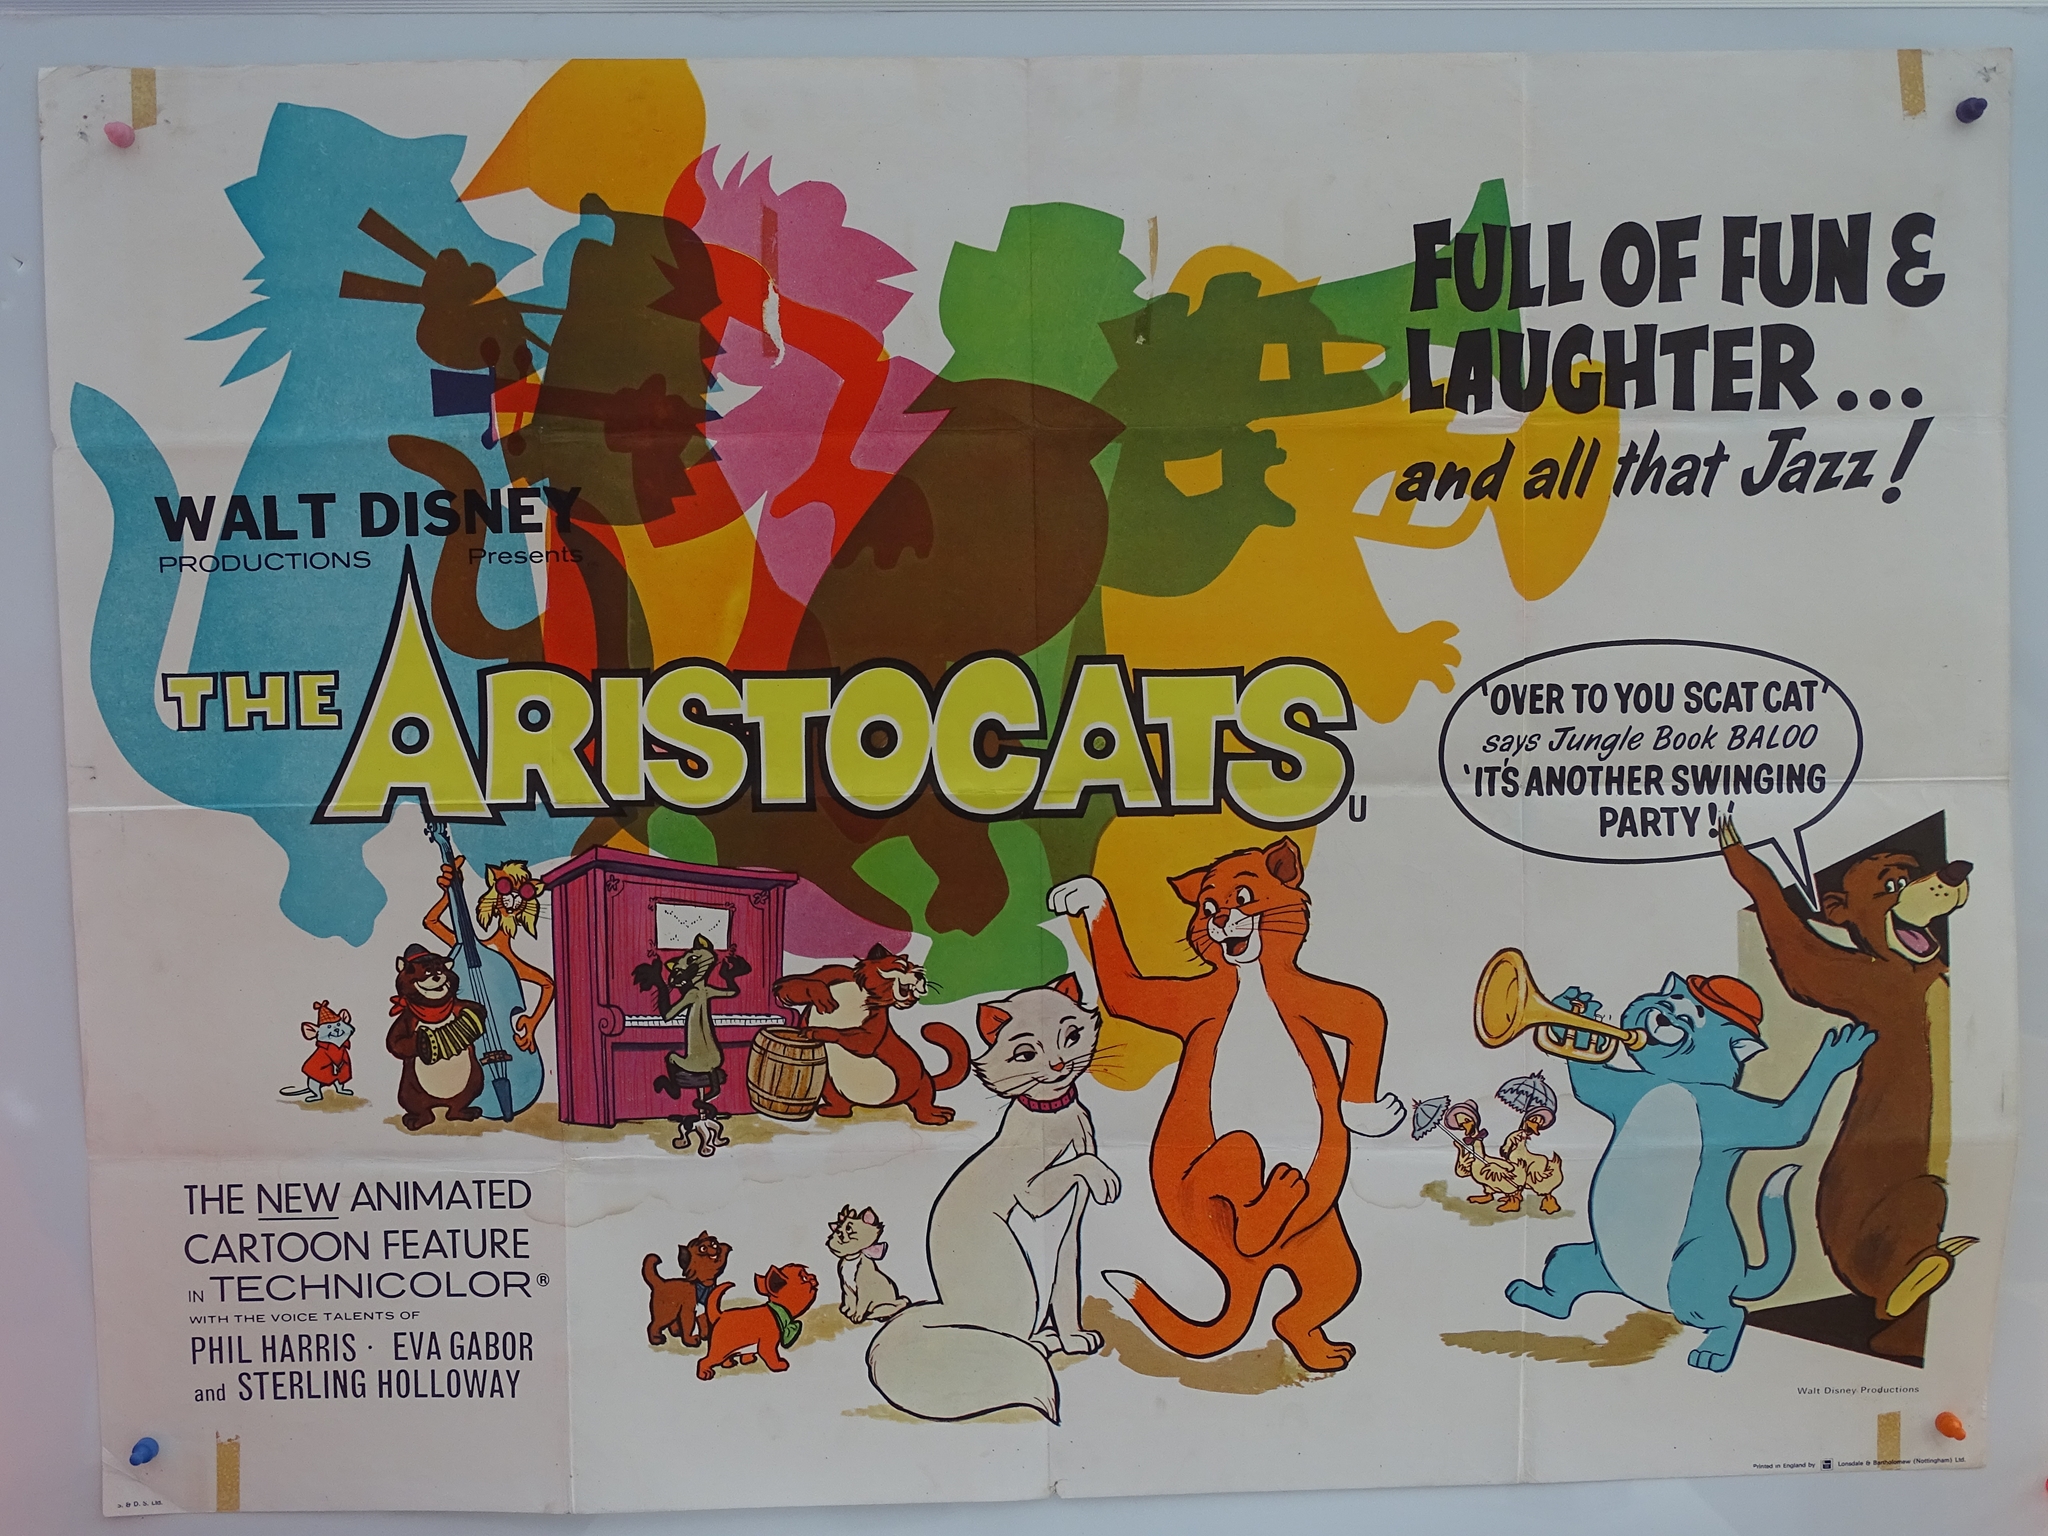 THE ARISTOCATS (1975) - UK Quad Film Poster - FIRST RELEASE - Classic WALT DISNEY feline jazz